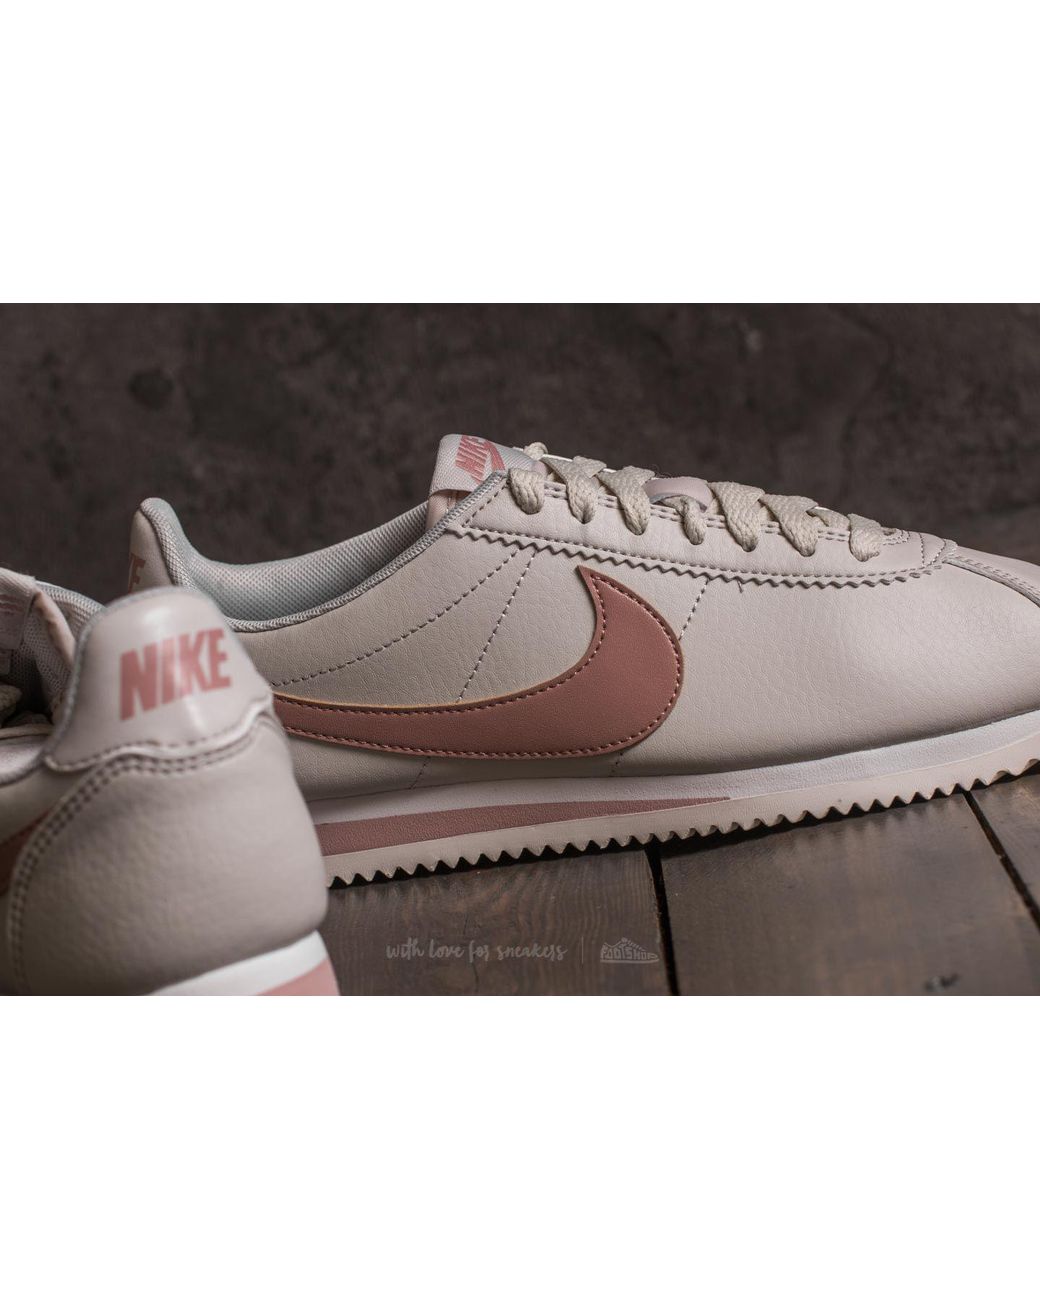 Nike Wmns Classic Cortez Leather Light Bone/ Particle Pink | Lyst